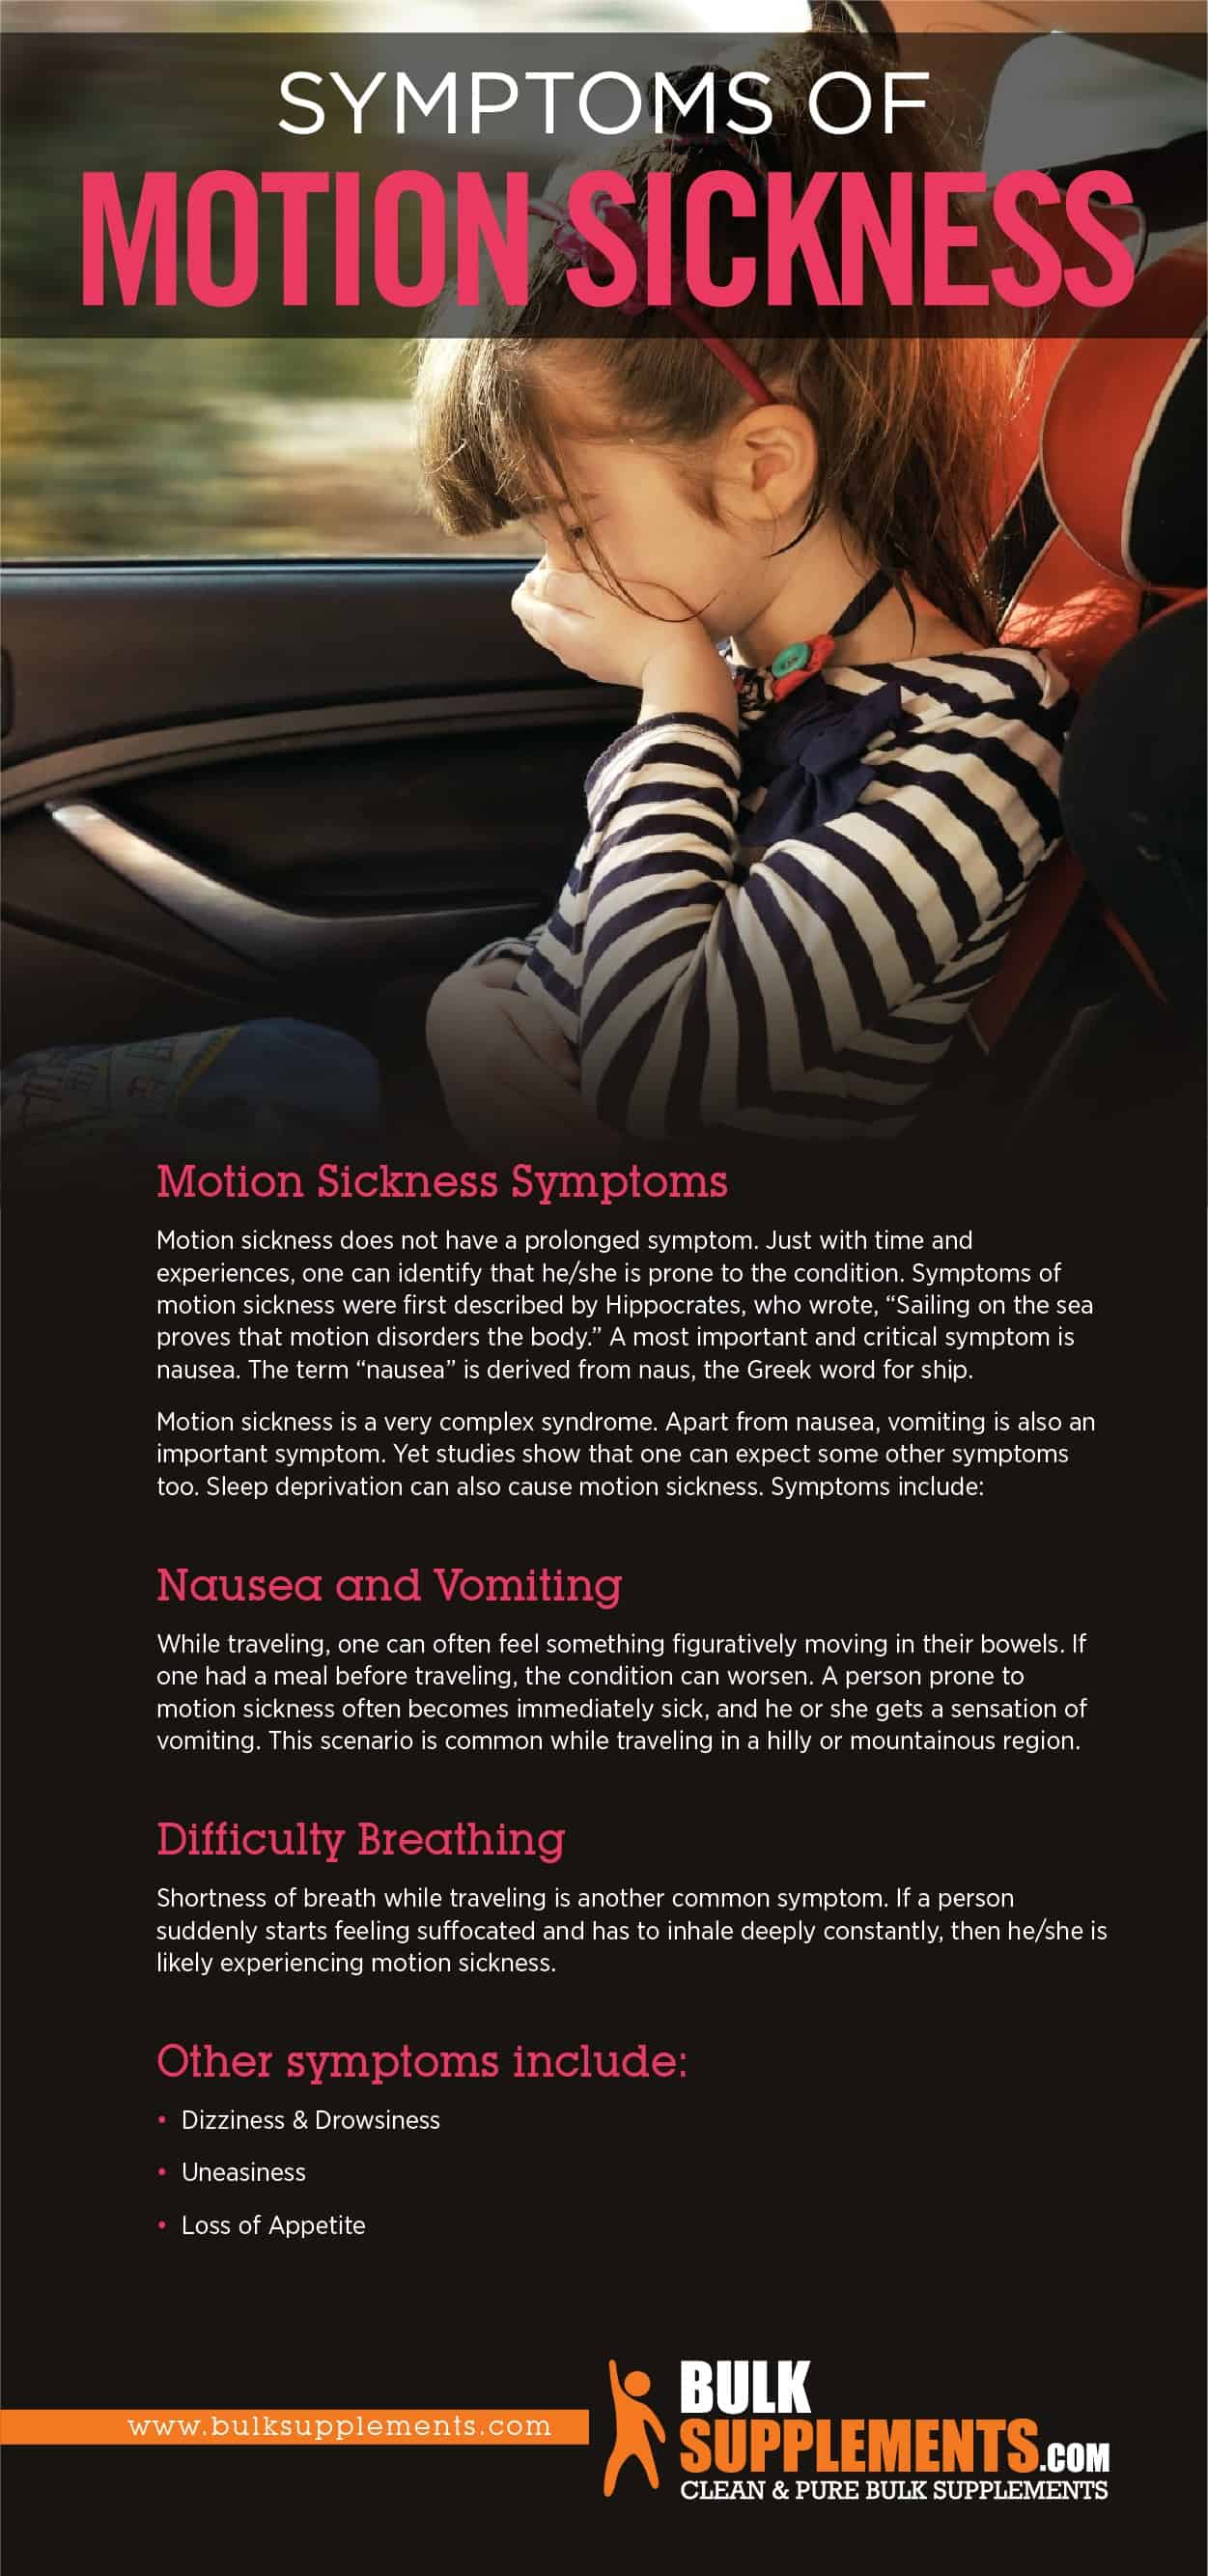 Symptoms of Motion Sickness